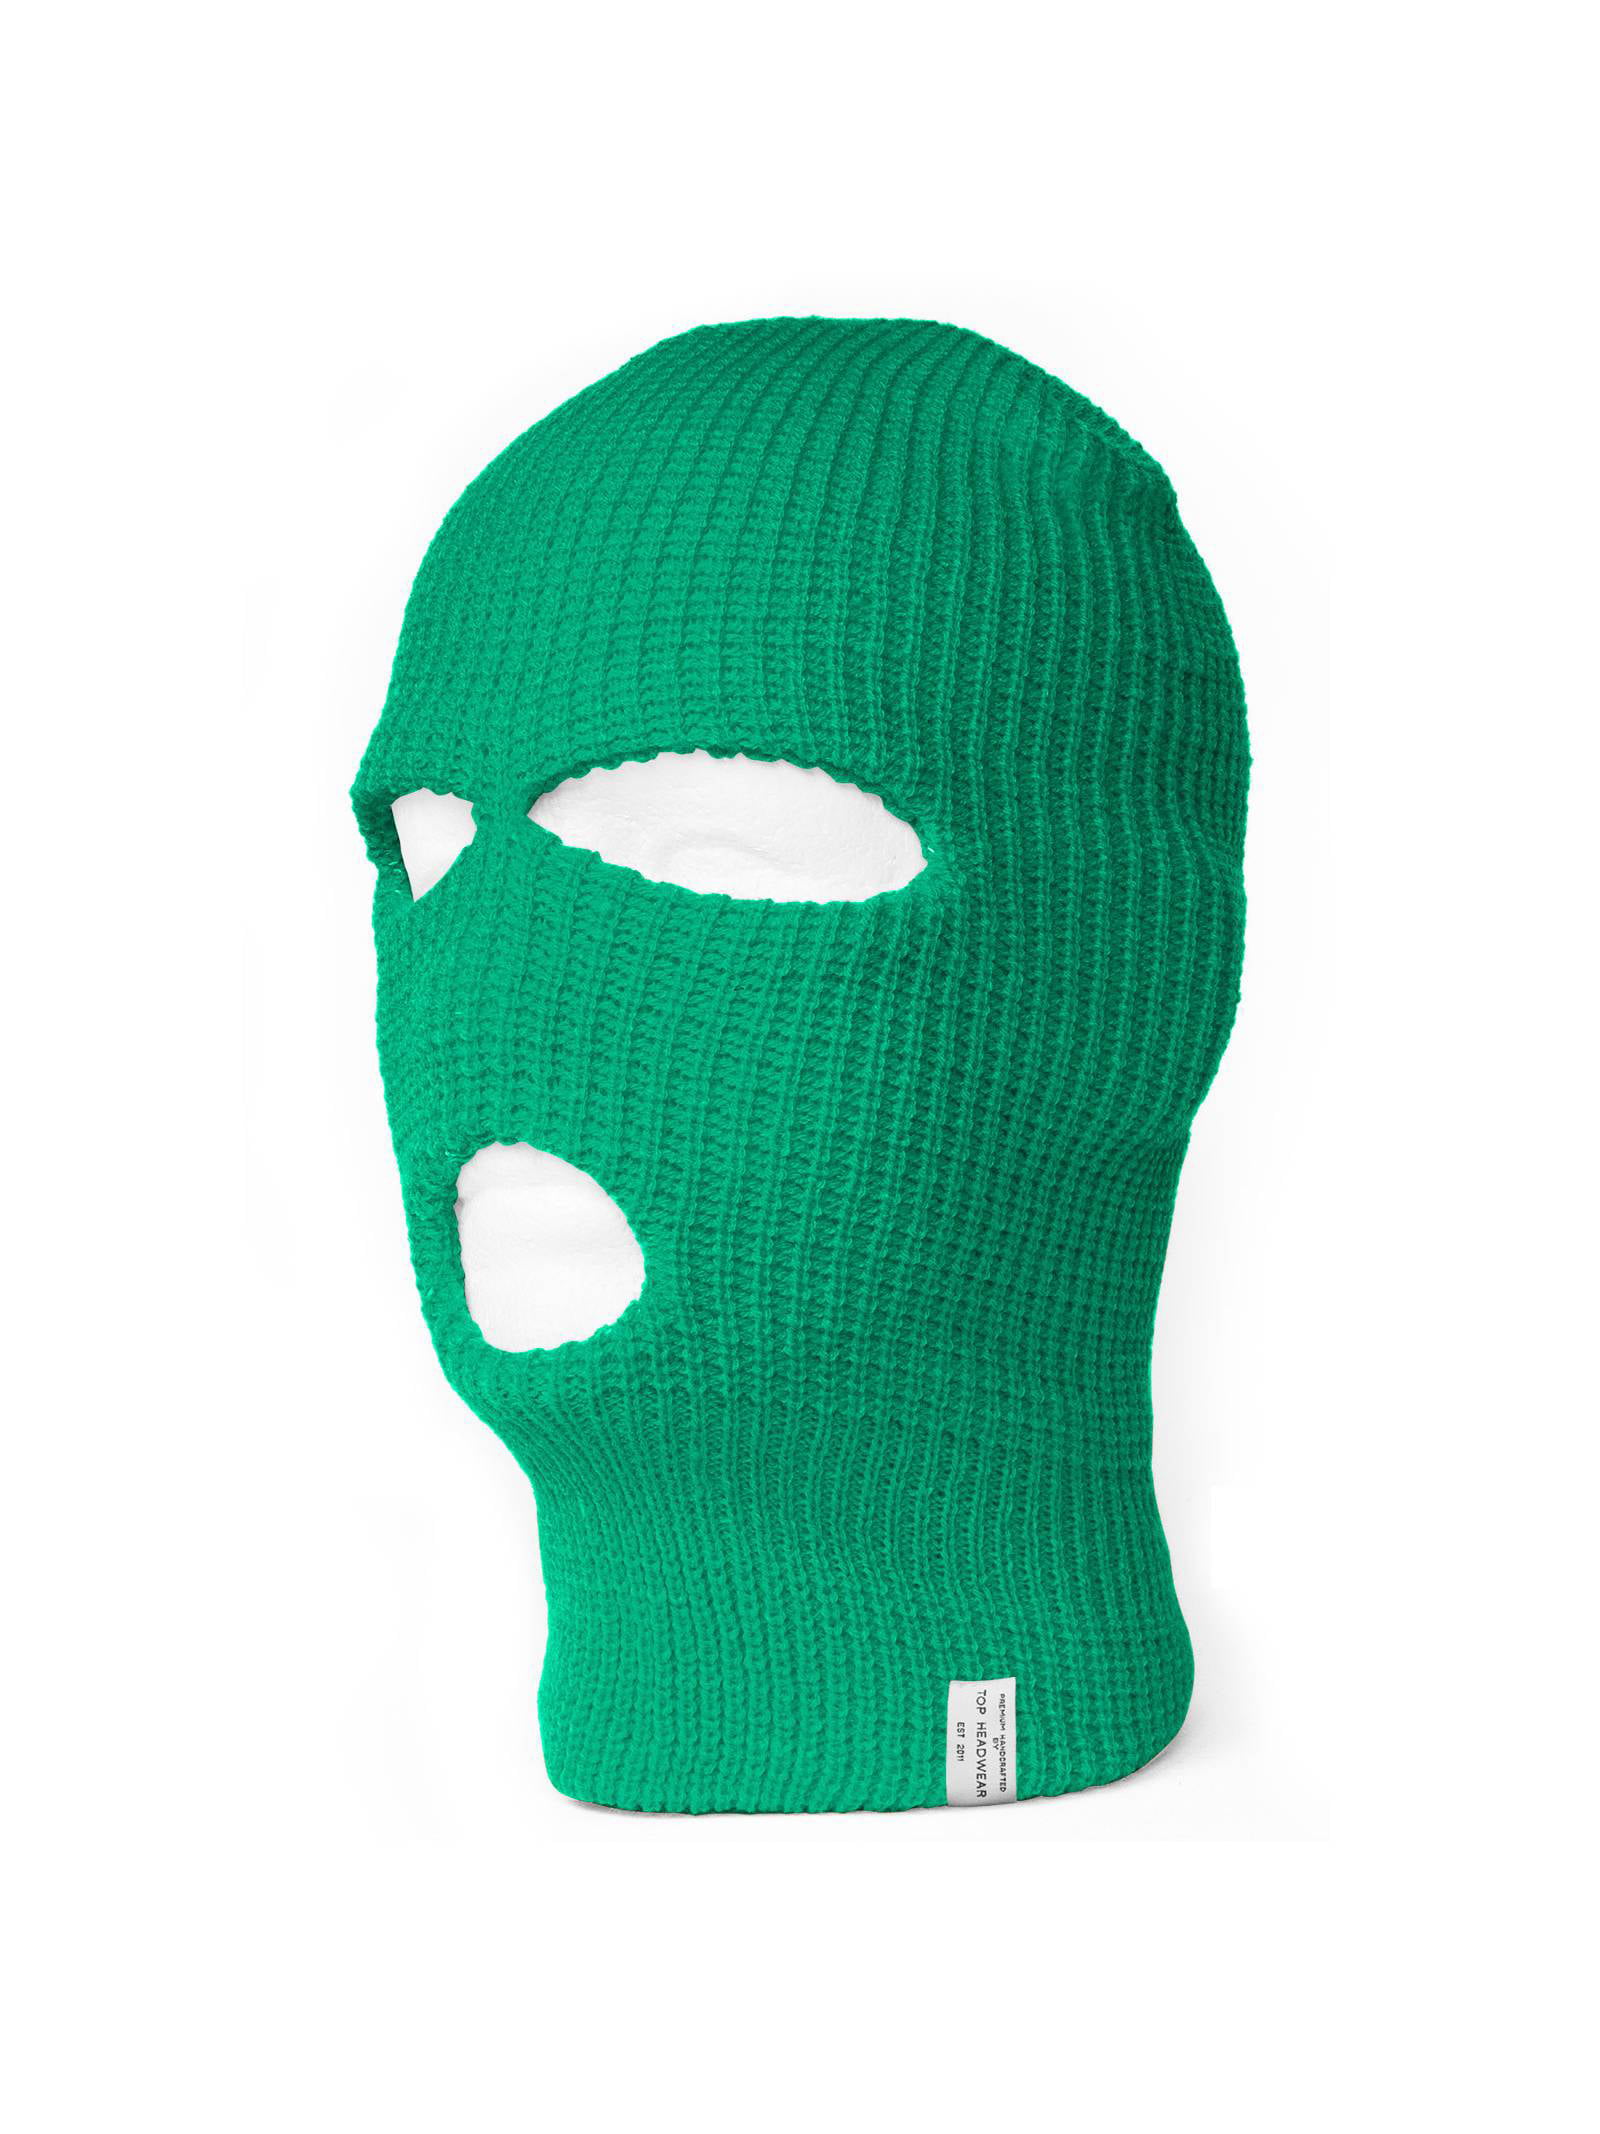 TopHeadwear's 3 Hole Face Ski Mask, Kelly Green - Walmart.com